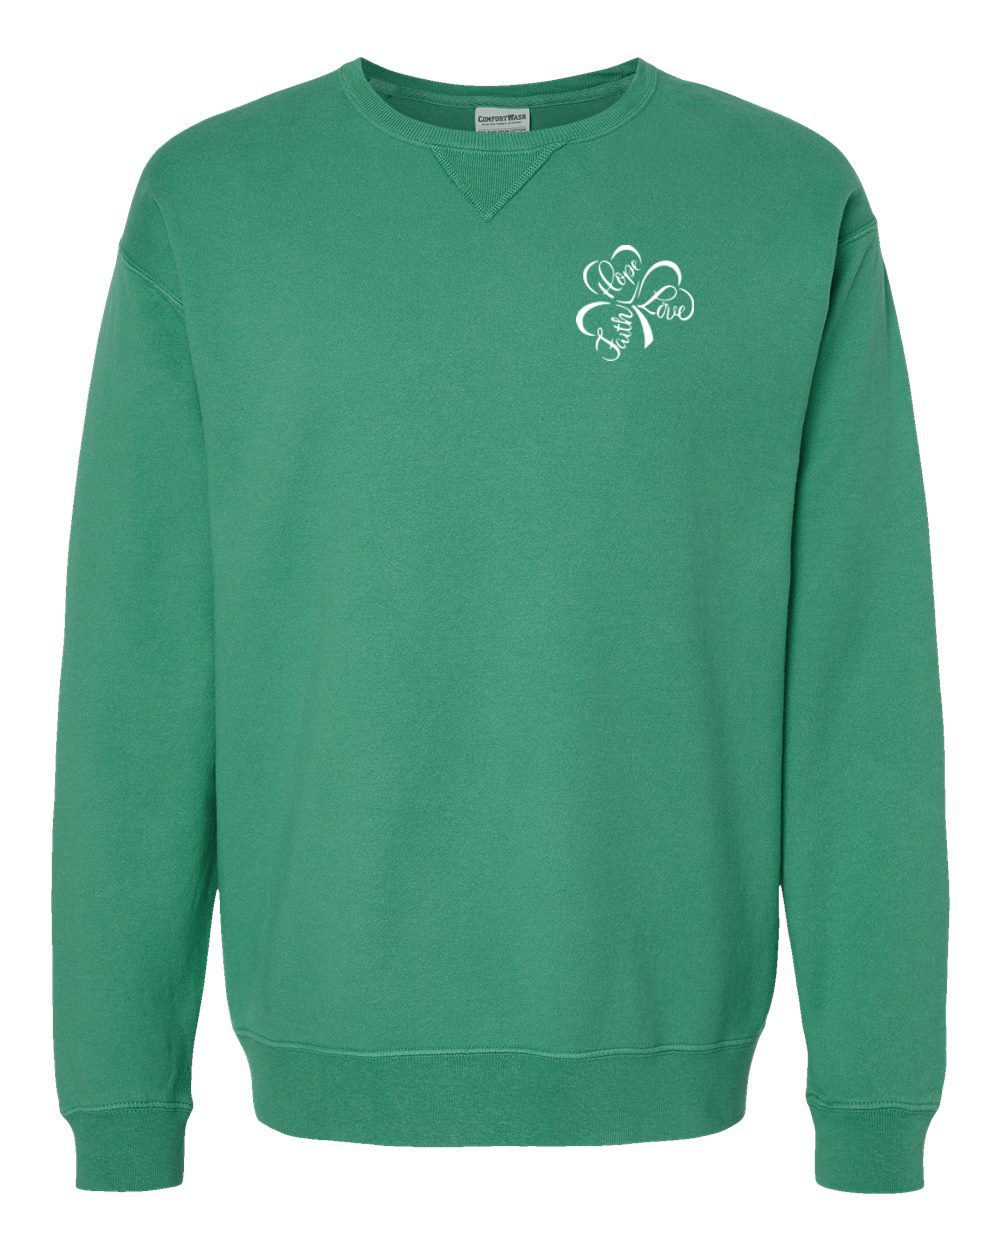 Faith Hope Love Garment-Dyed Crewneck Sweatshirt